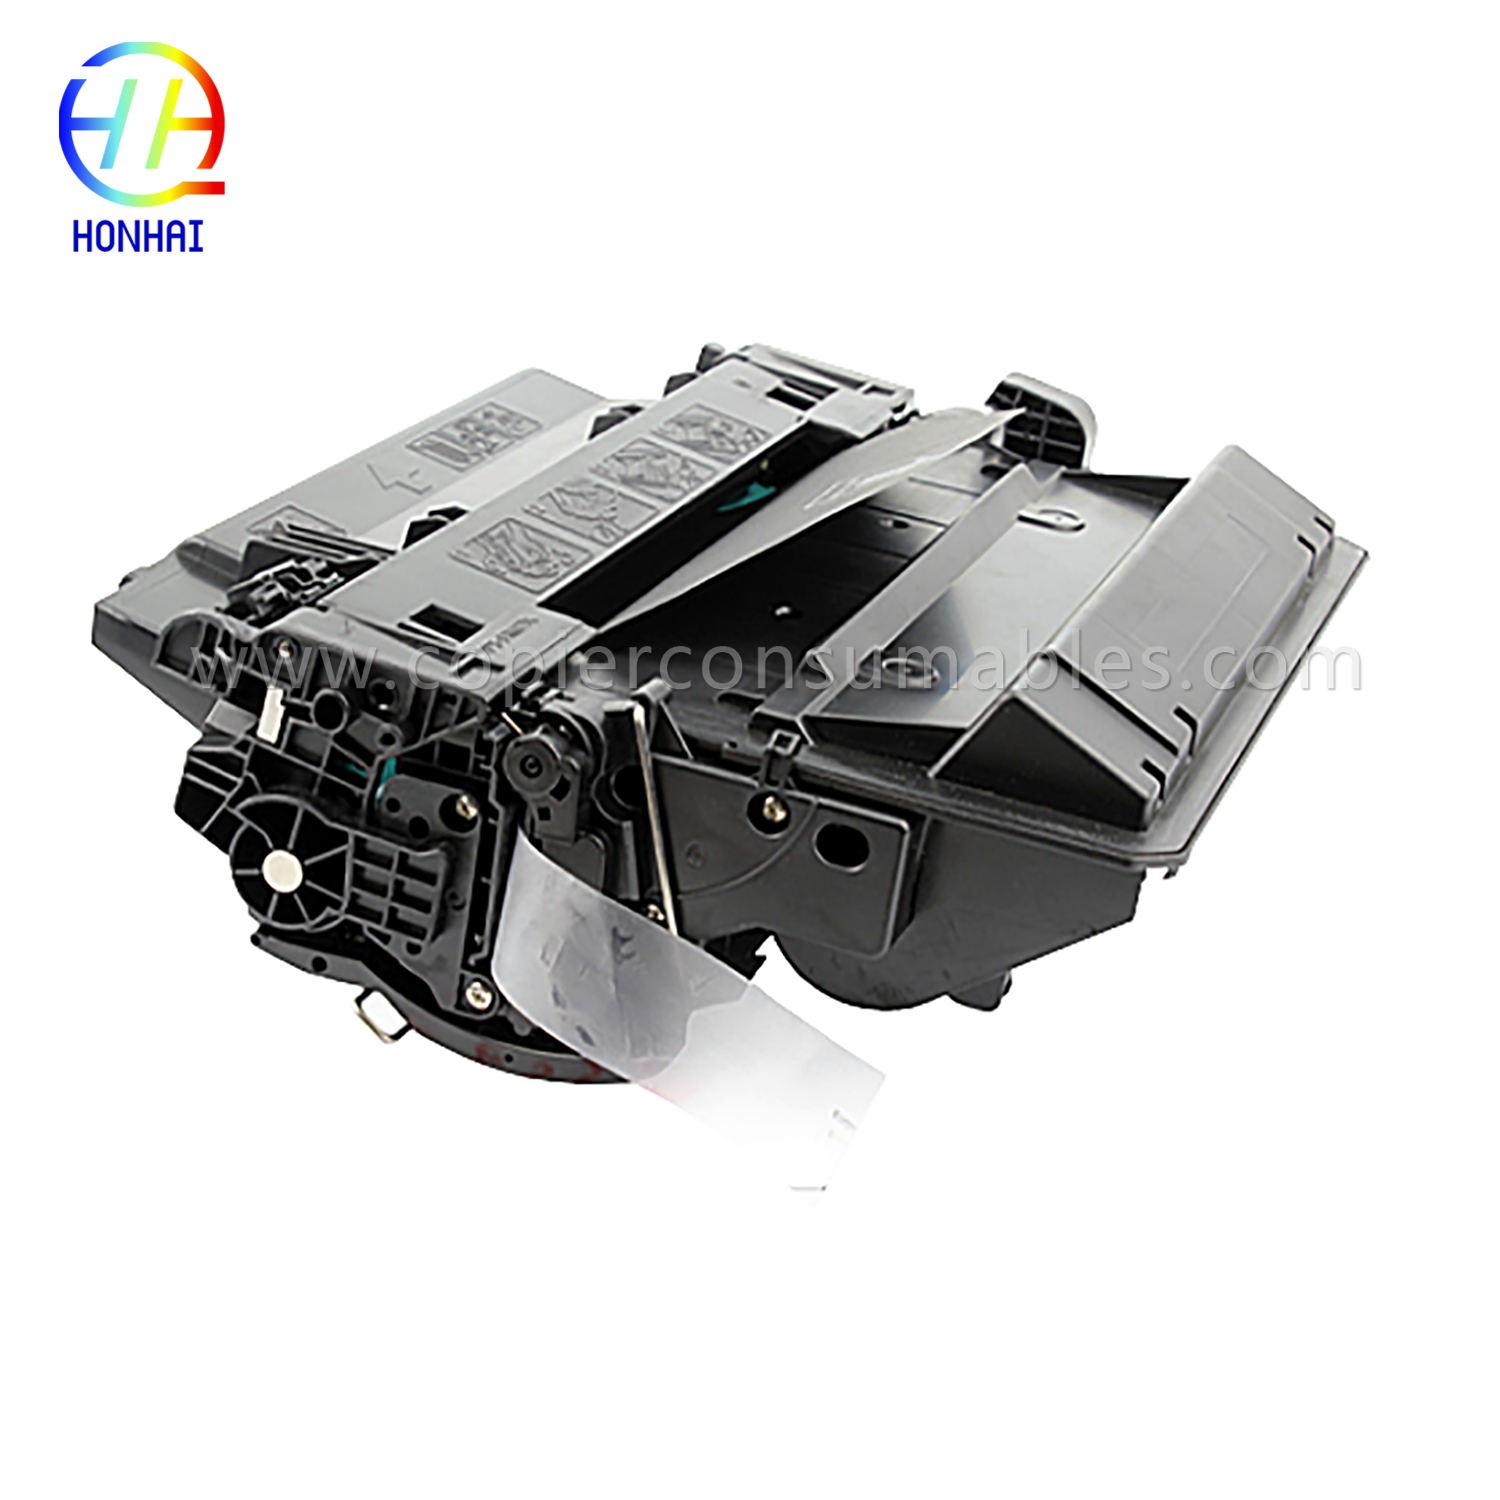 Kaata Toner Tae HP LaserJet LaserJet Pro MFP M521dn Enterprise P3015 (CE255X) -1 (3) 拷贝